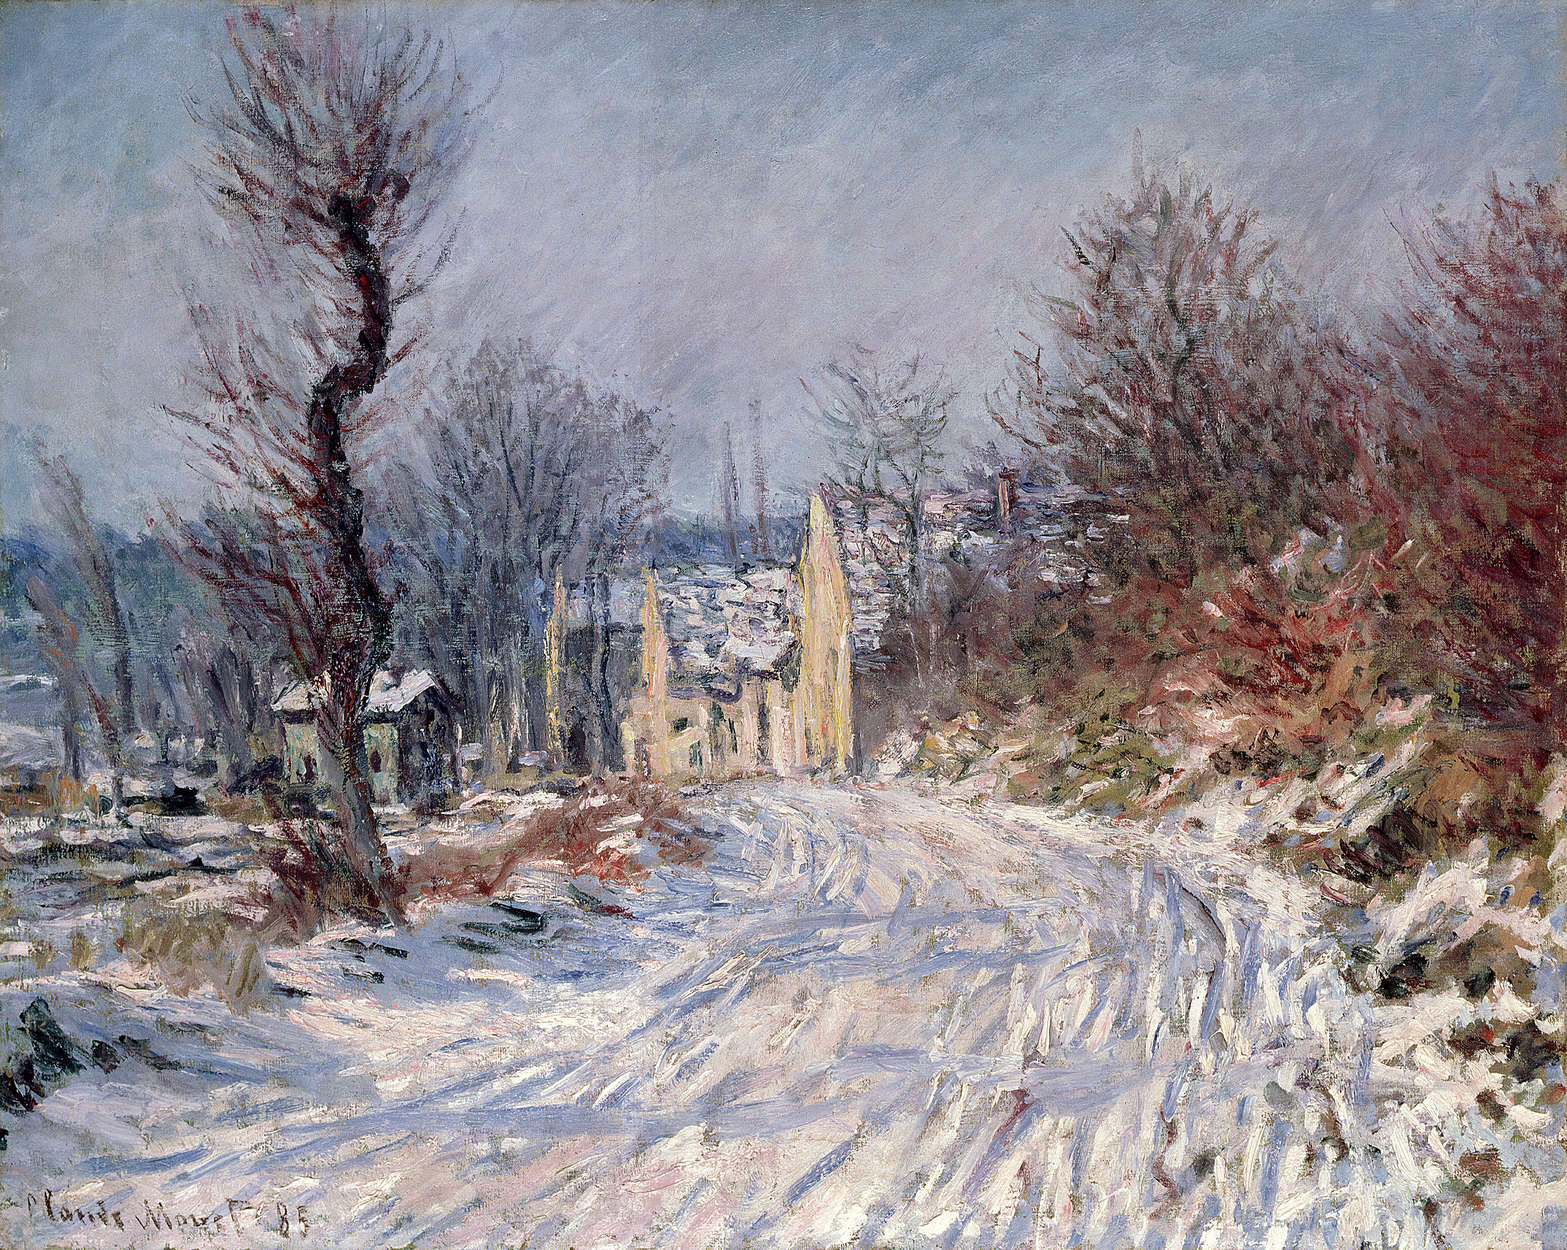             Fotomurali "La strada per Giverny" di Claude Monet
        